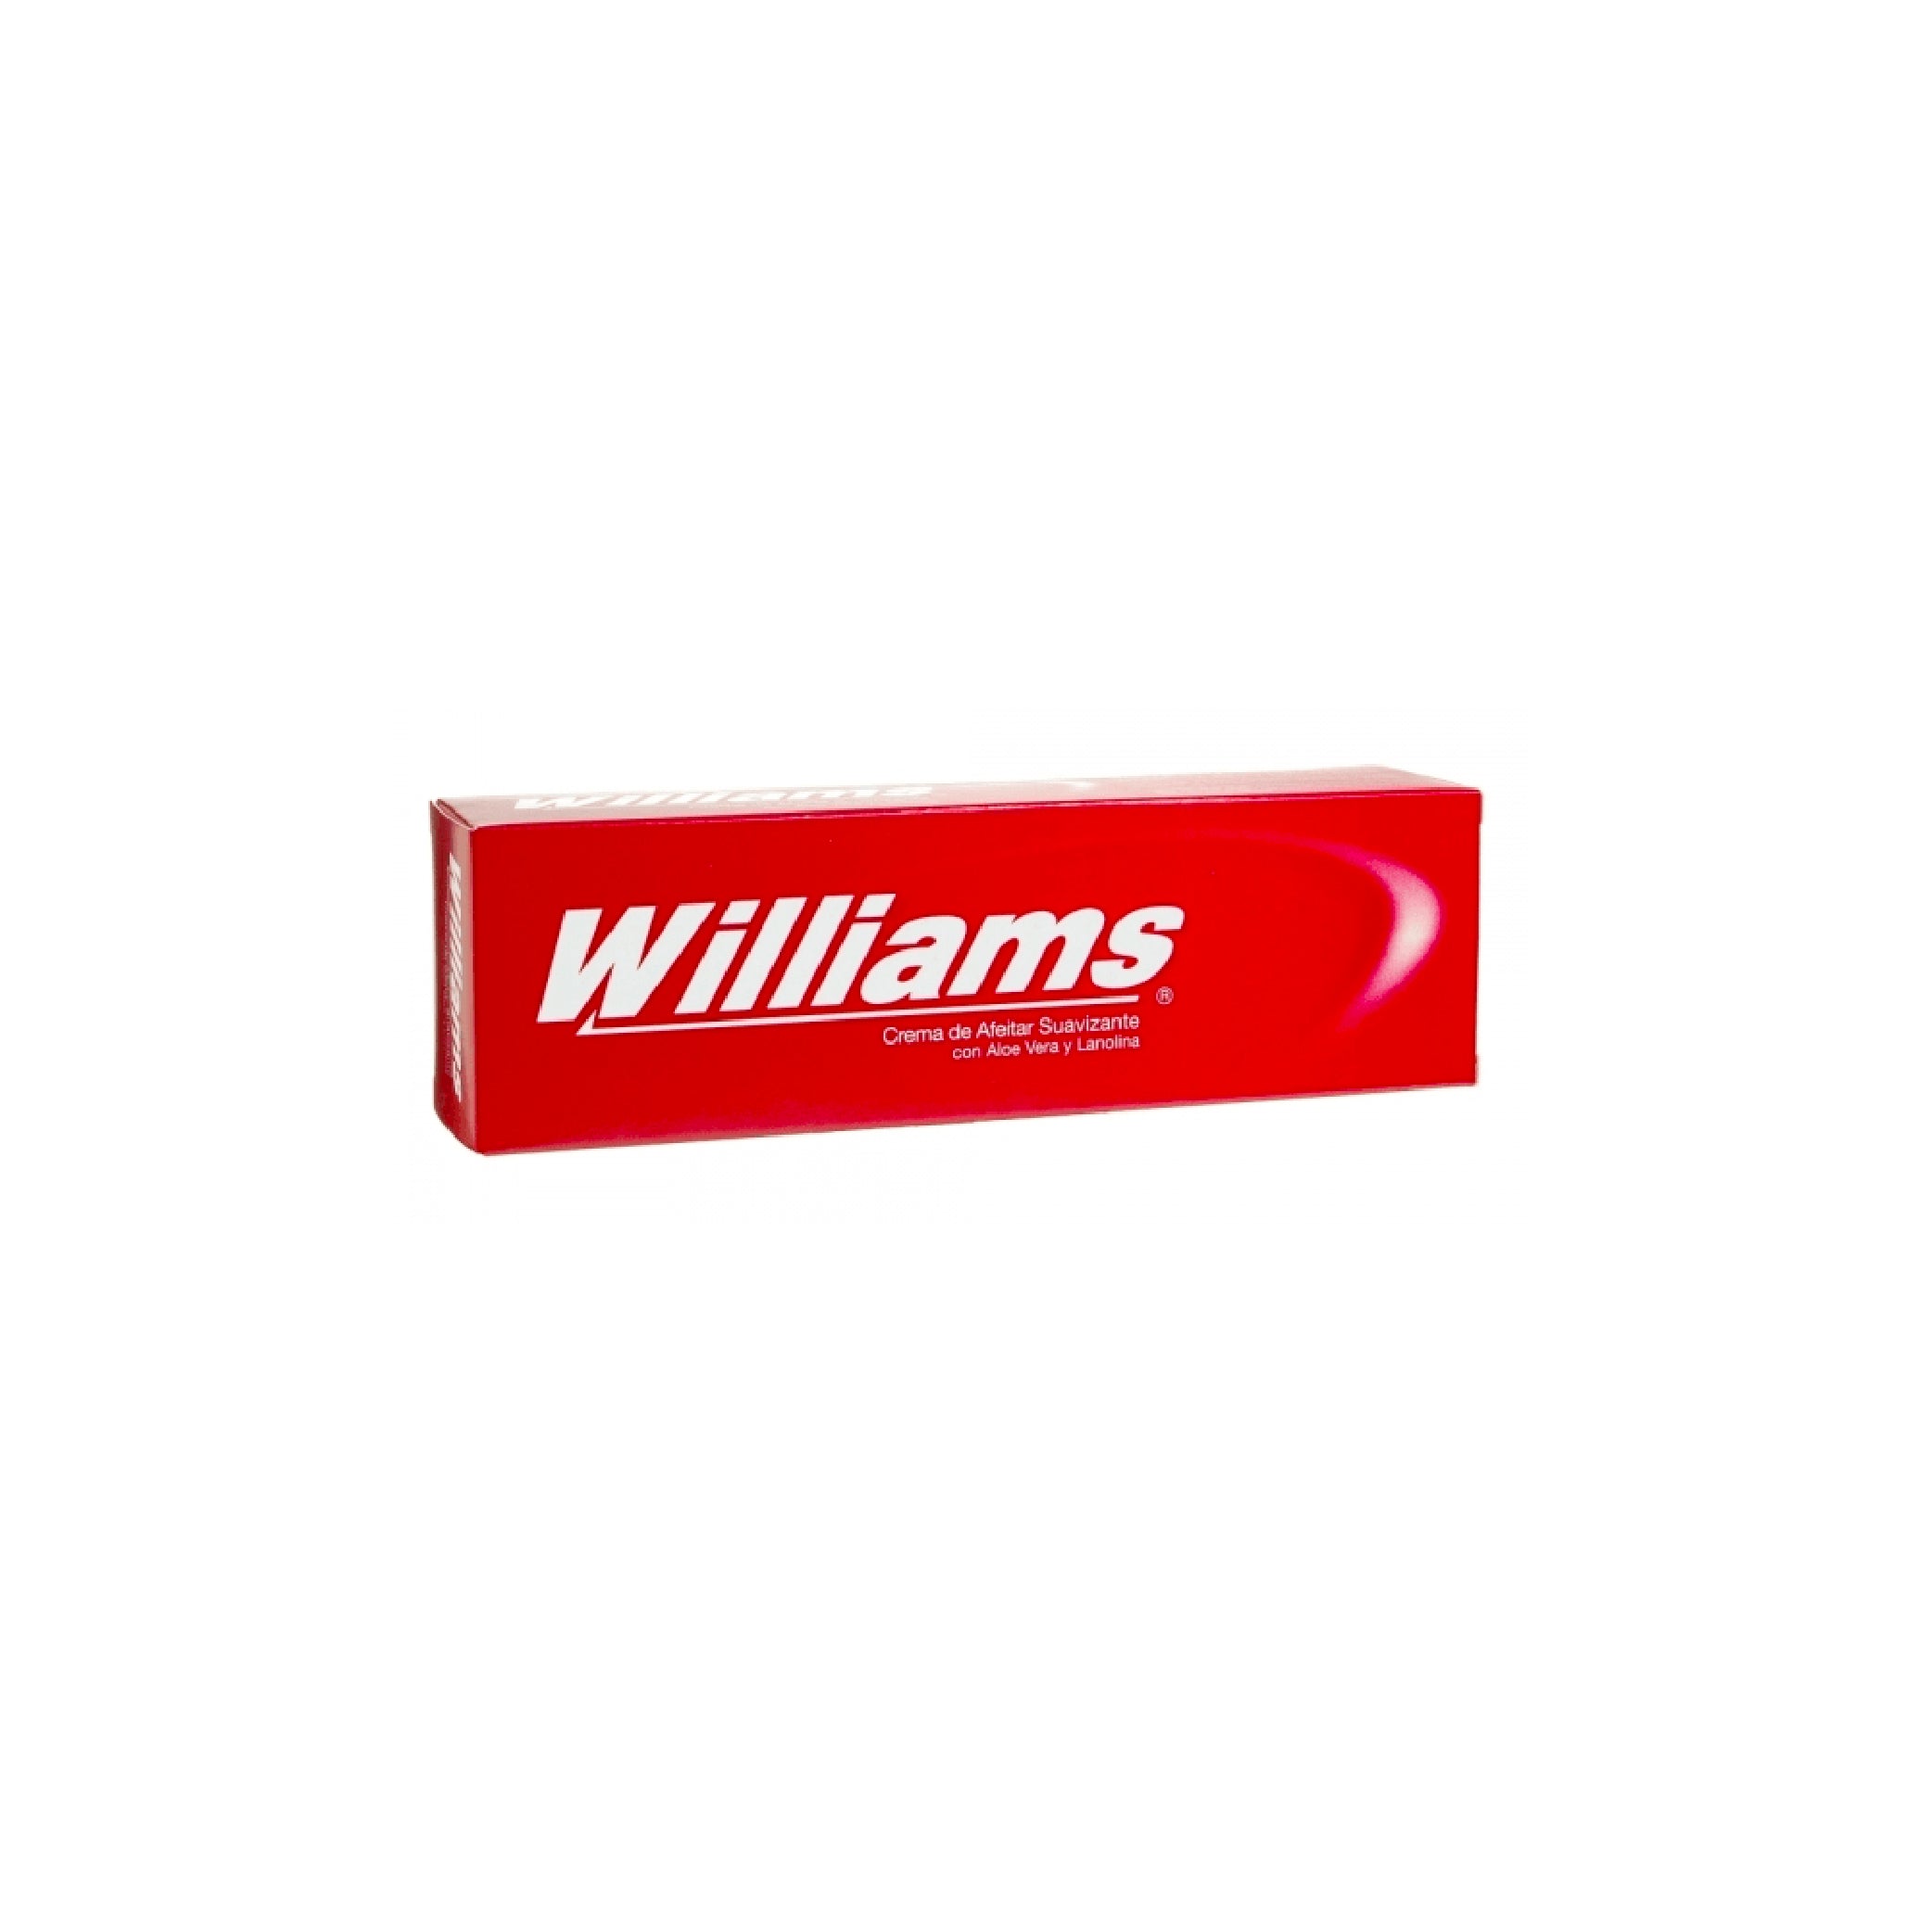 WILLIAMS CREMA DE AFEITAR C/LANOL. 100GRS